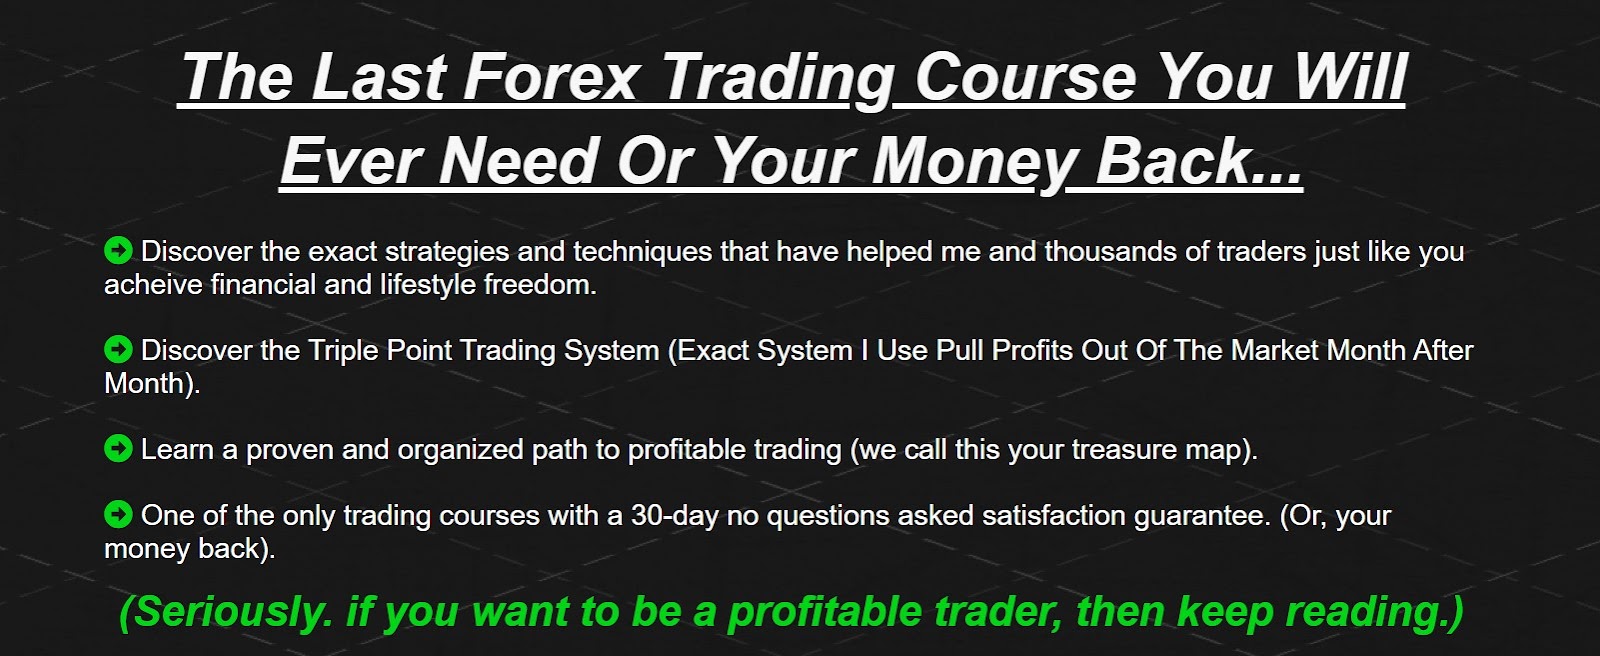 Trading Channel - Popular Forex trading mentorship